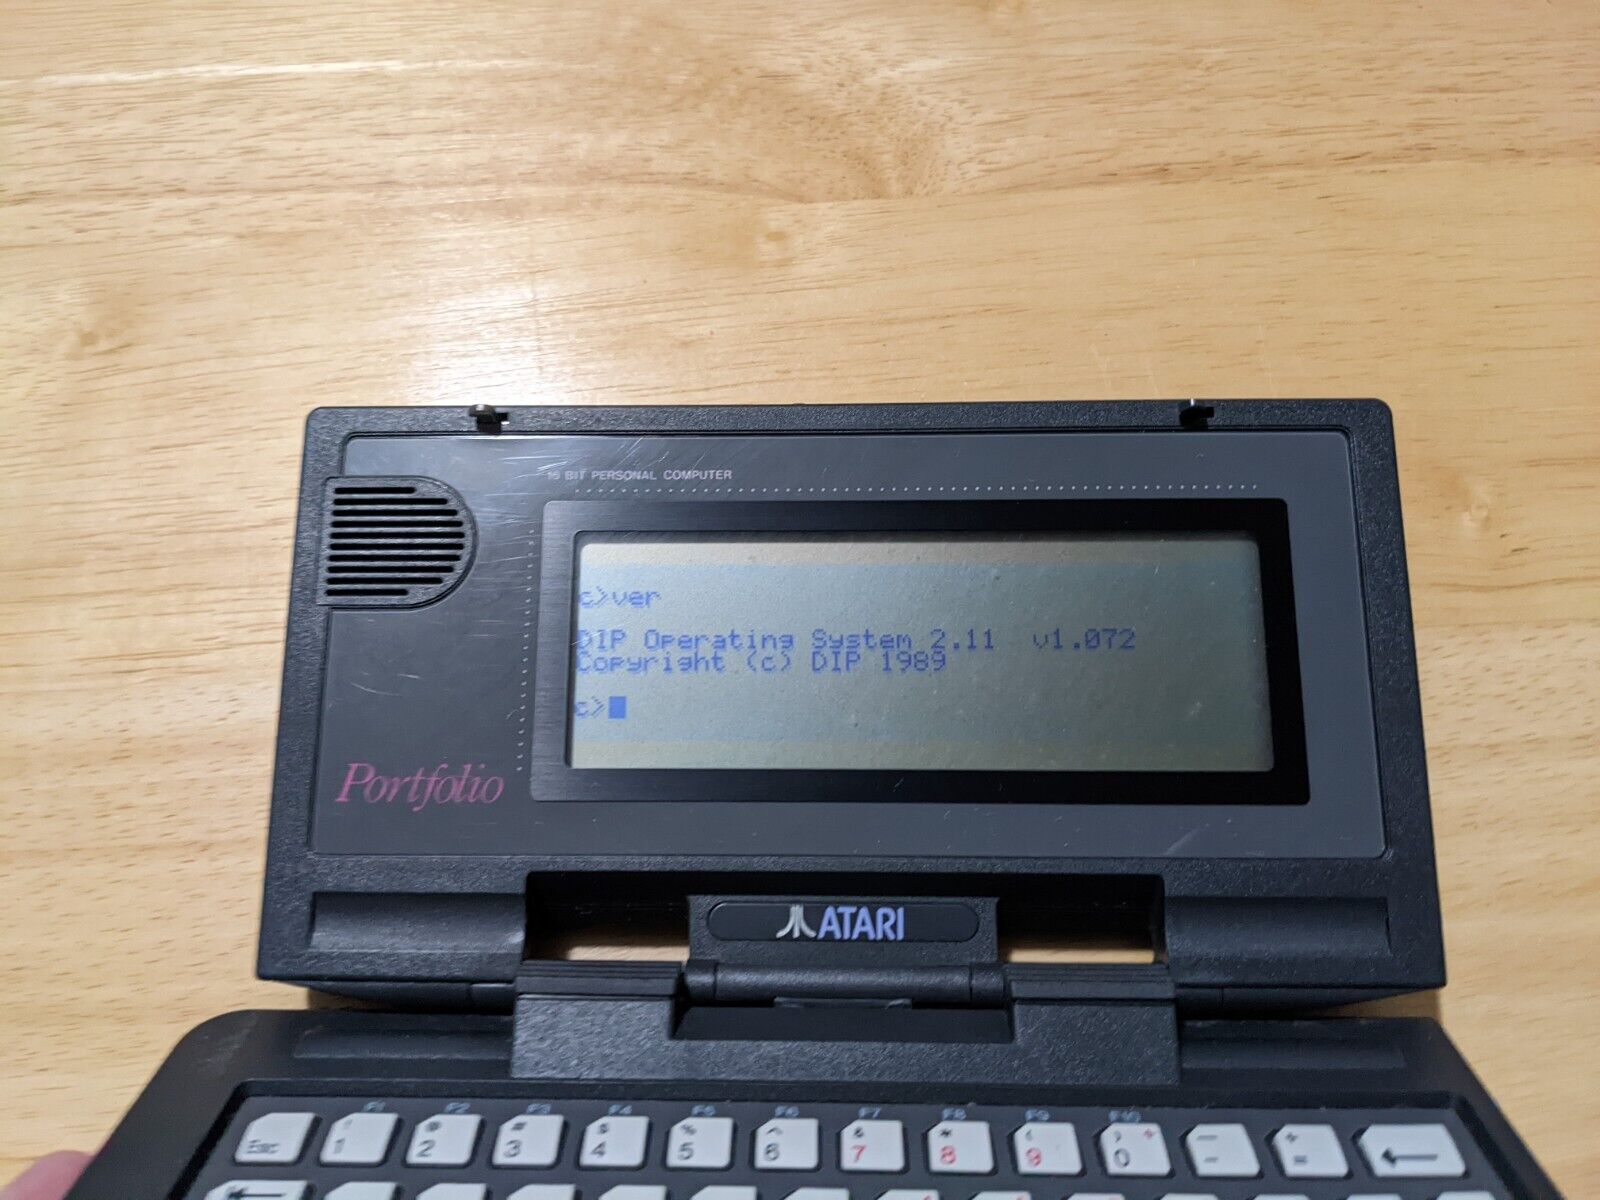 Atari Portfolio HPC-004 Working with boxed Parallel Interface, Memory card